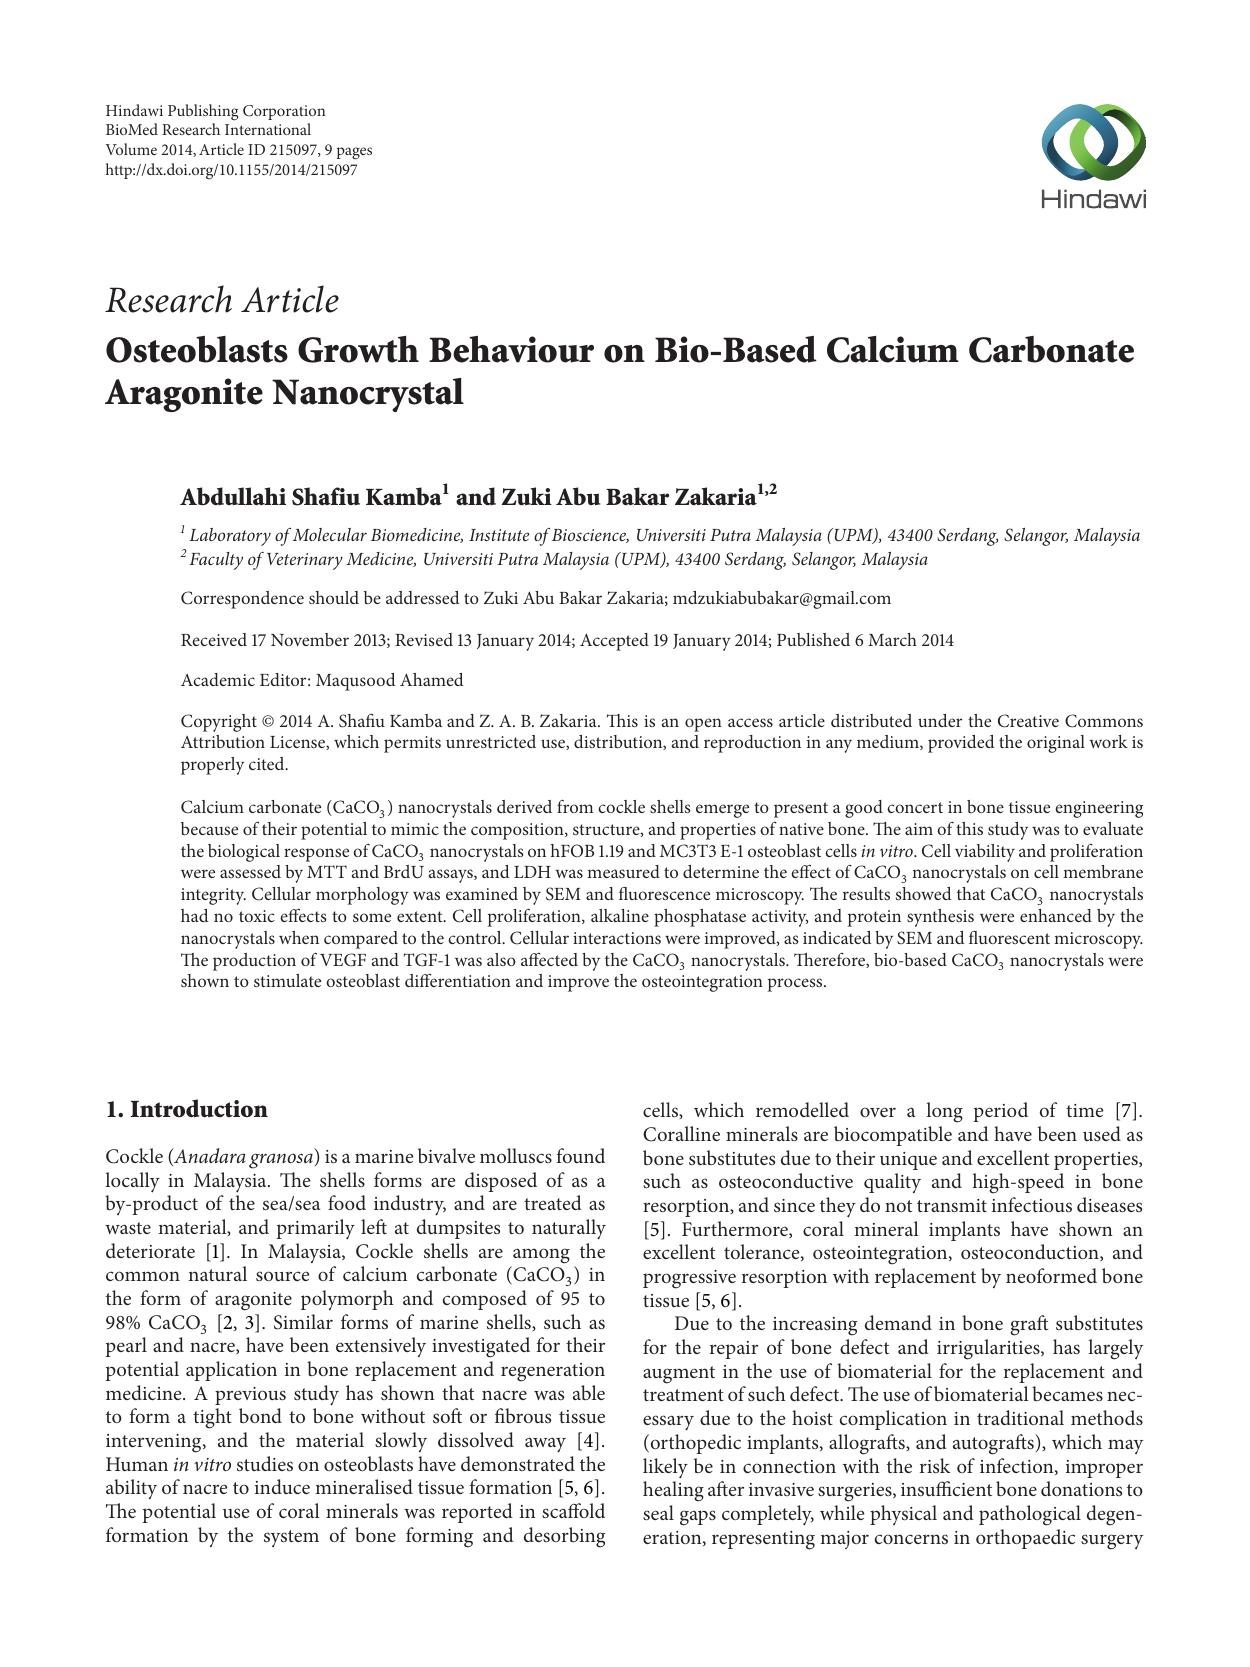 Osteoblasts Growth Behaviour on Bio-Based Calcium CarbonateAragonite Nanocrystal 2014